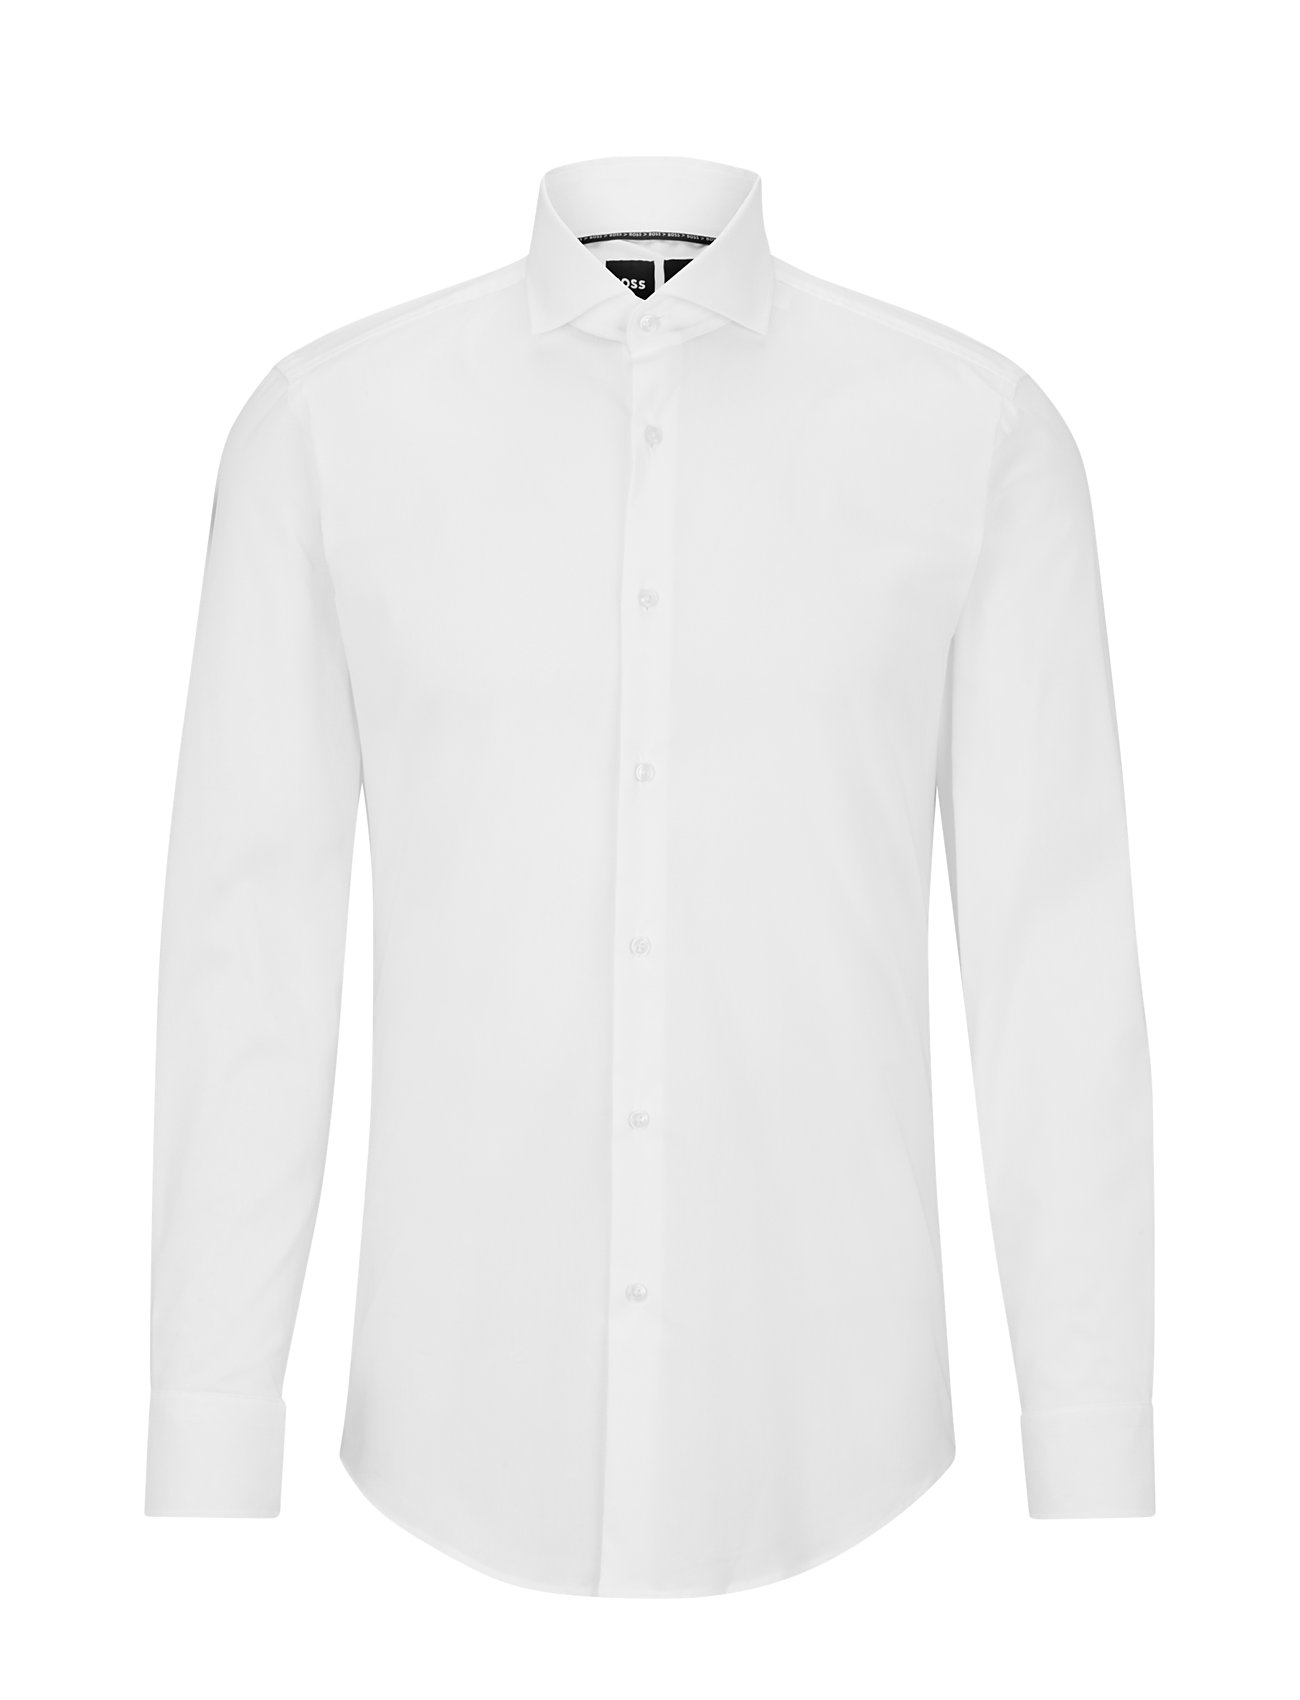 P-Hank-Spread-C1-222 Tops Shirts Tuxedo Shirts White BOSS